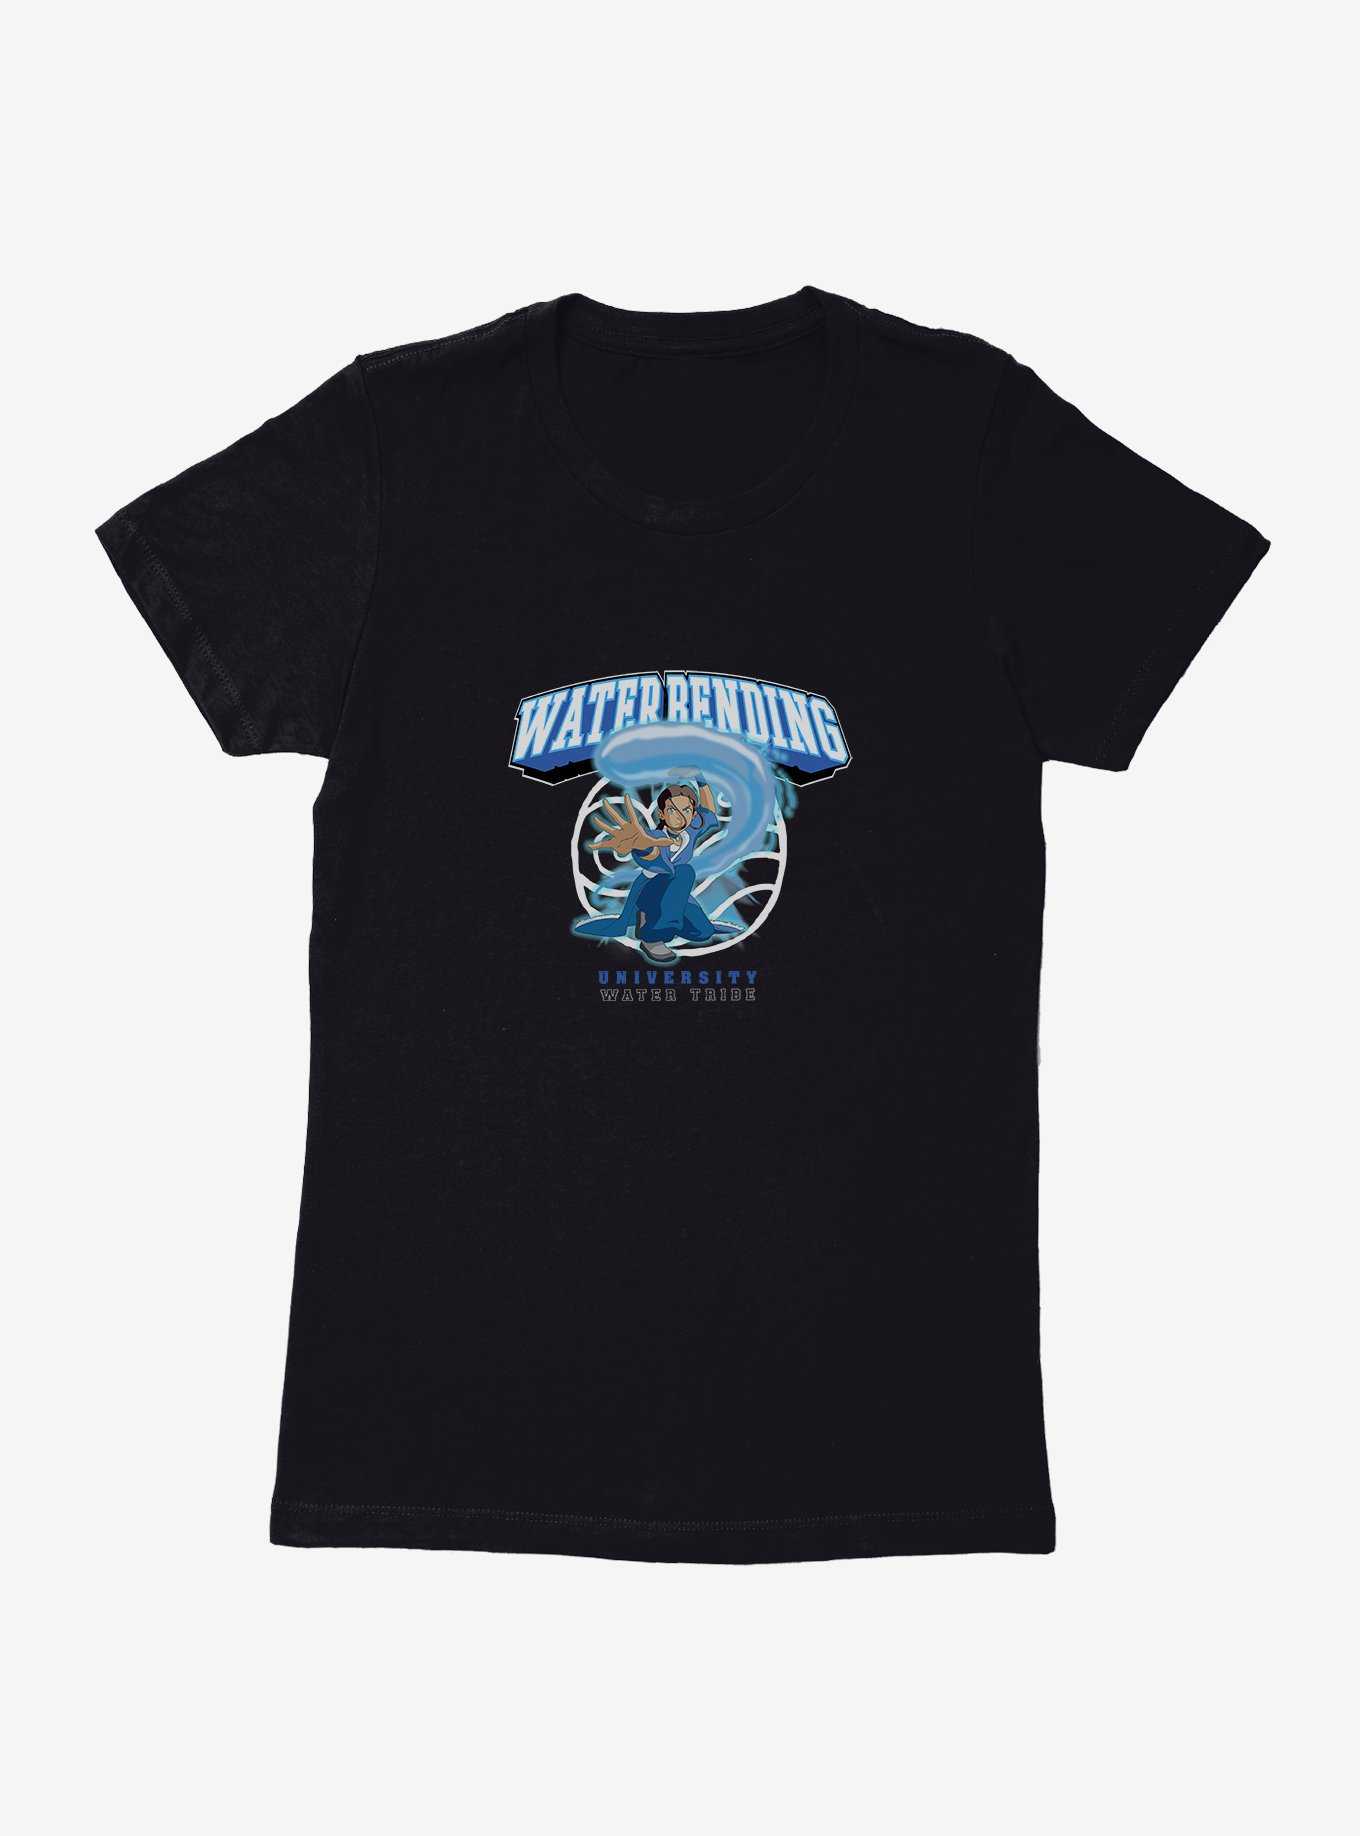 Avatar: The Last Airbender Waterbending University Womens T-Shirt, , hi-res